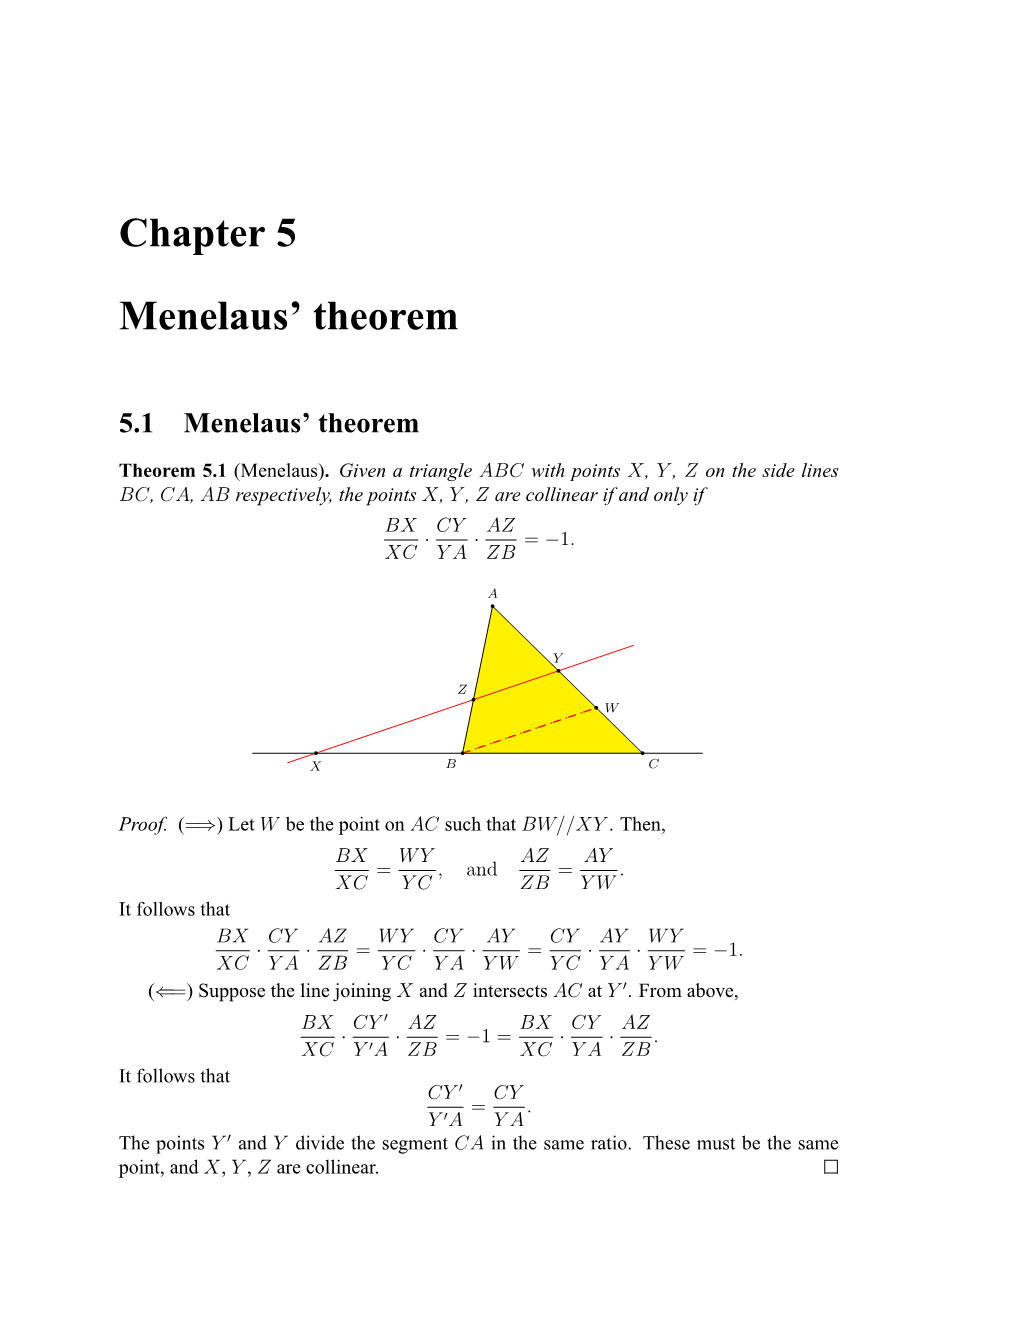 Chapter 5 Menelaus' Theorem